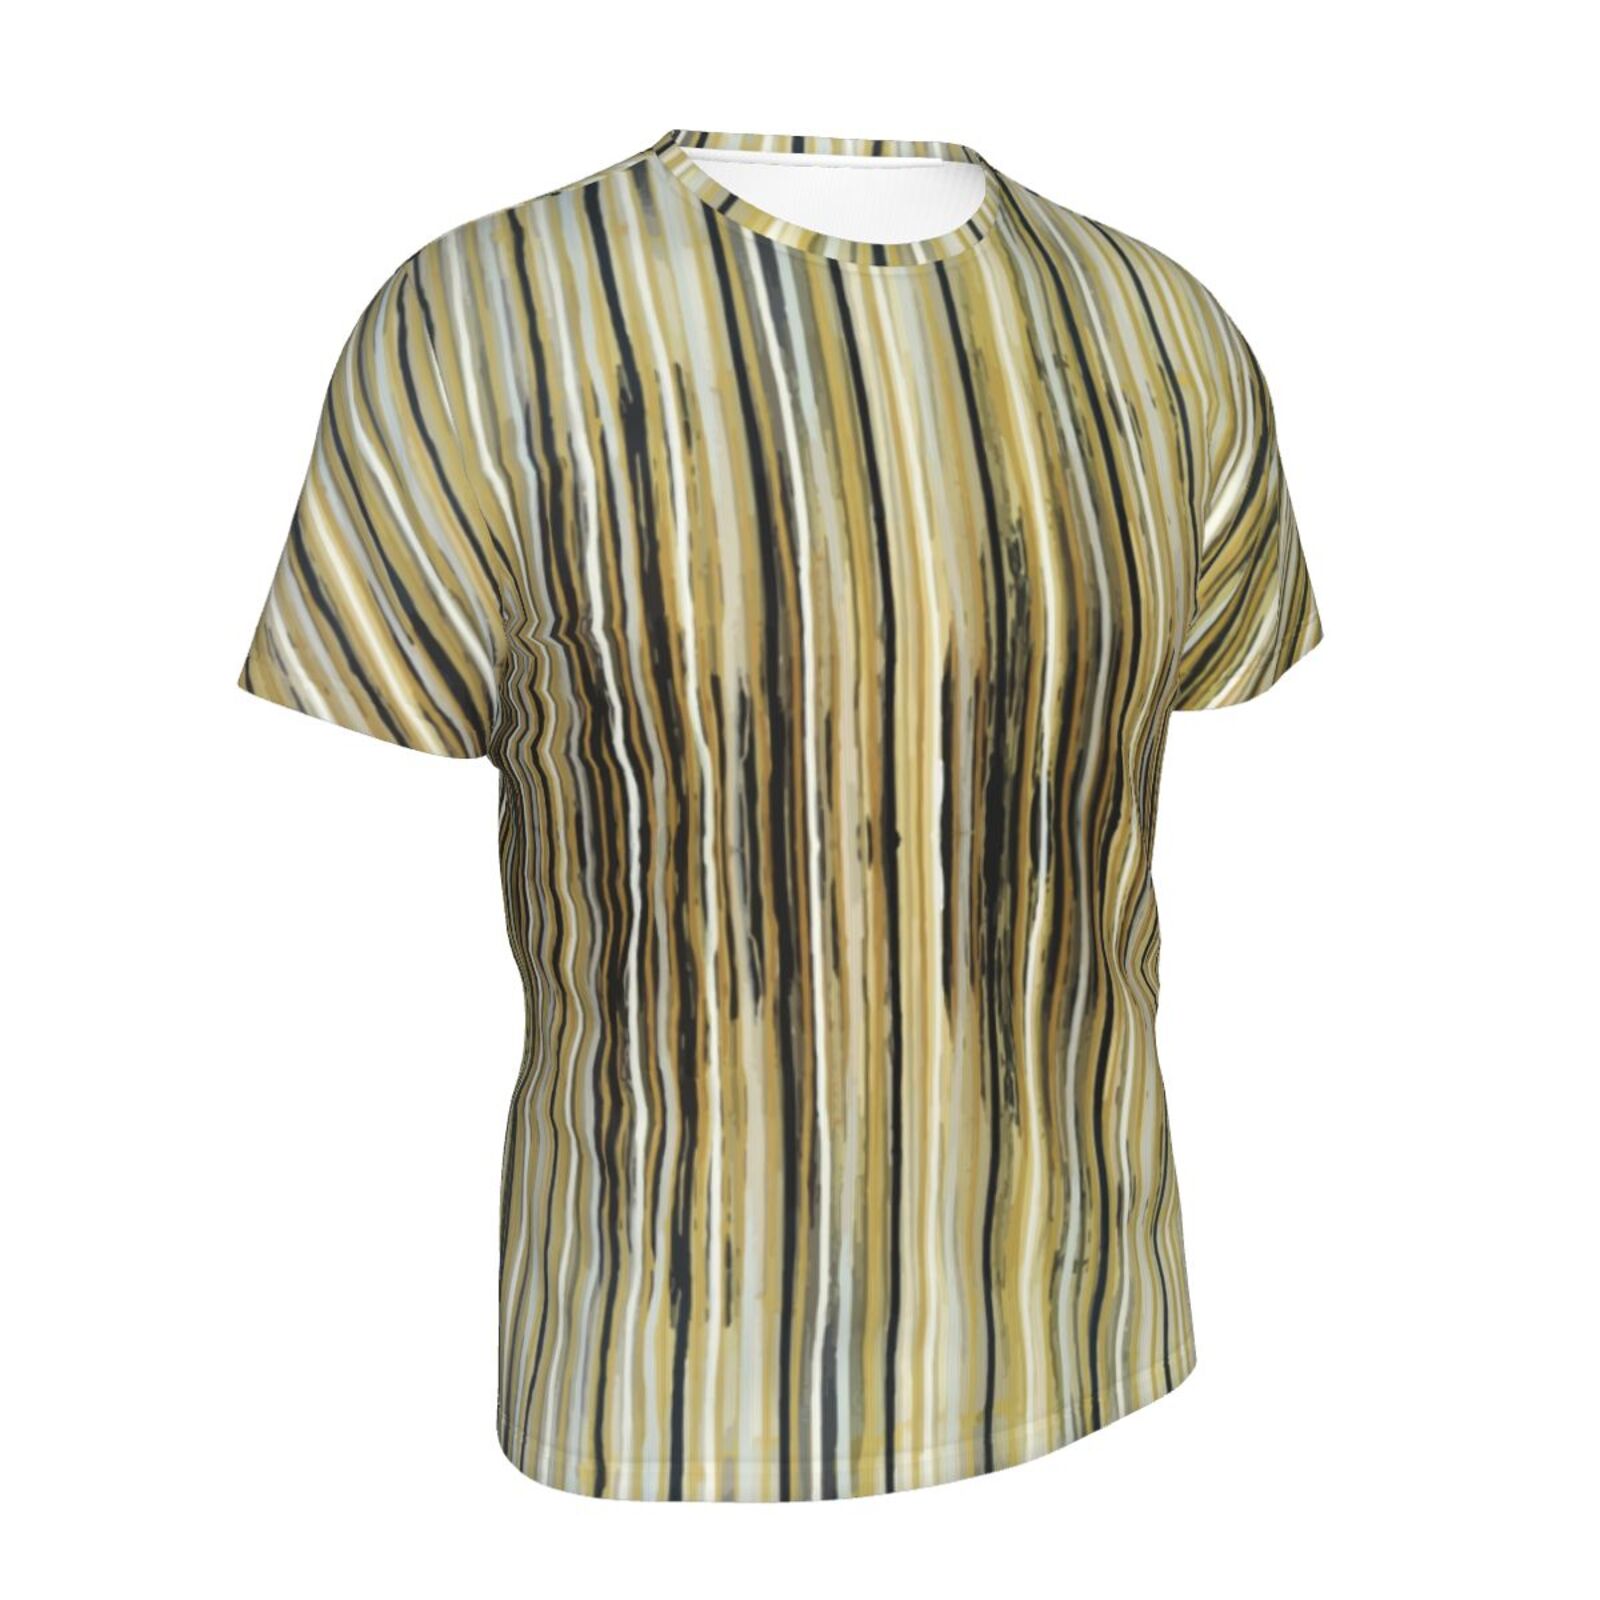 A Crush On Stripes Malerei Elemente Klassisch Belgien T-shirt